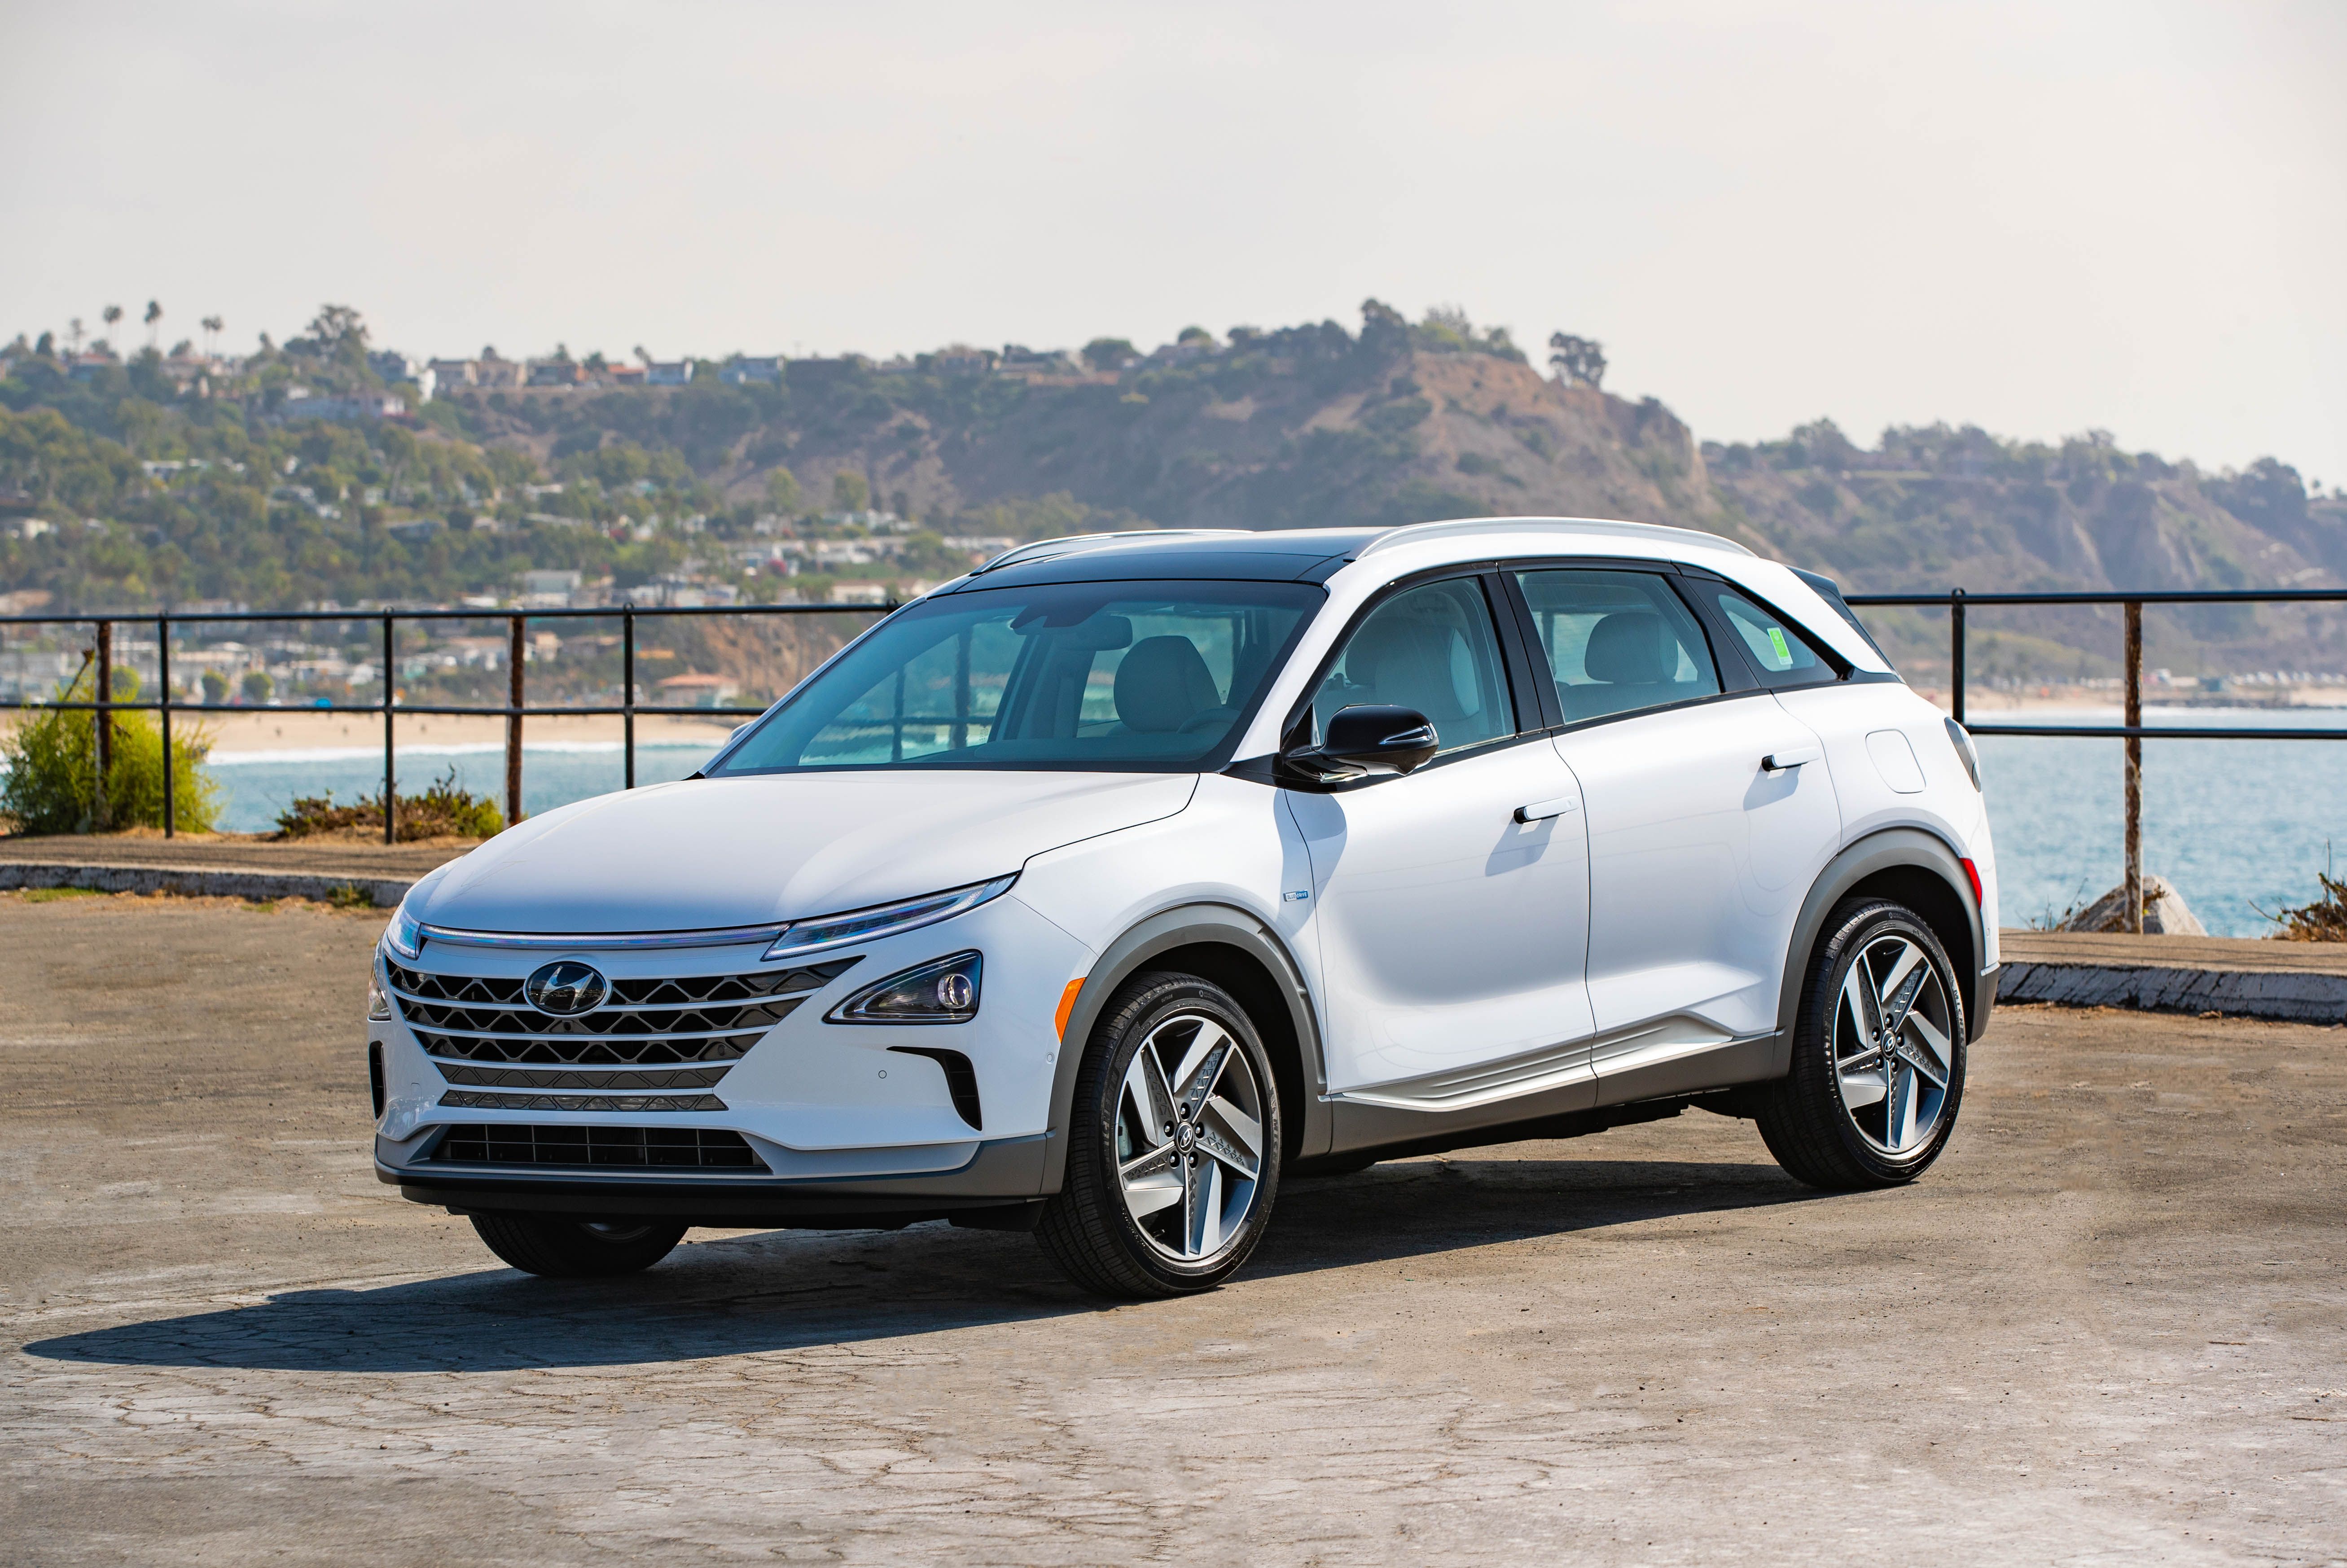 2020 Hyundai Nexo Review Pricing And Specs